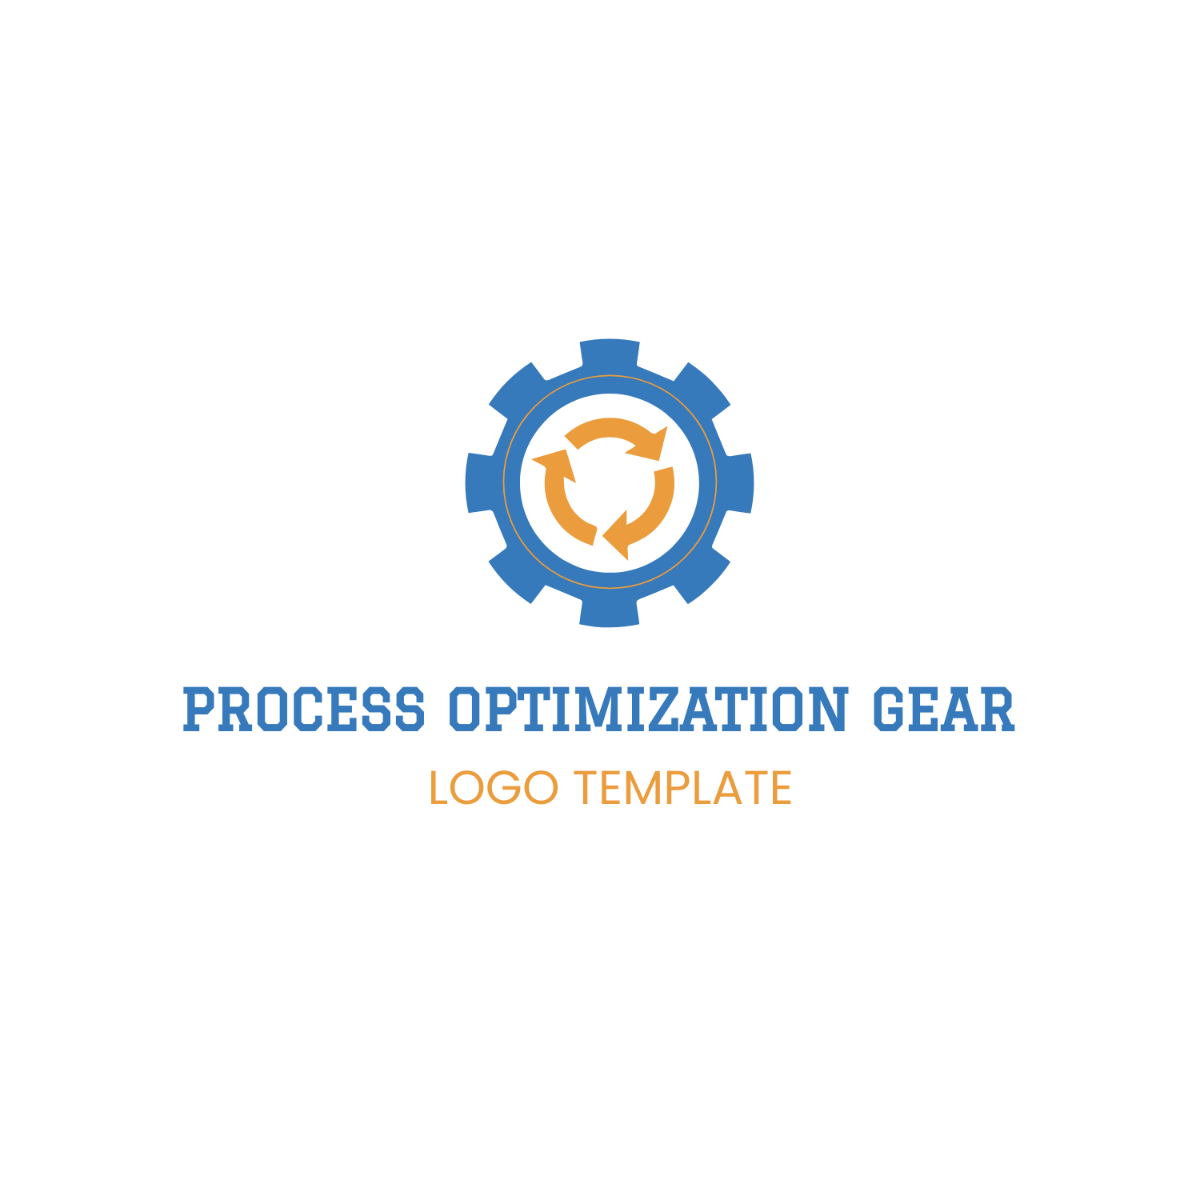 Free Process Optimization Gear Logo Template